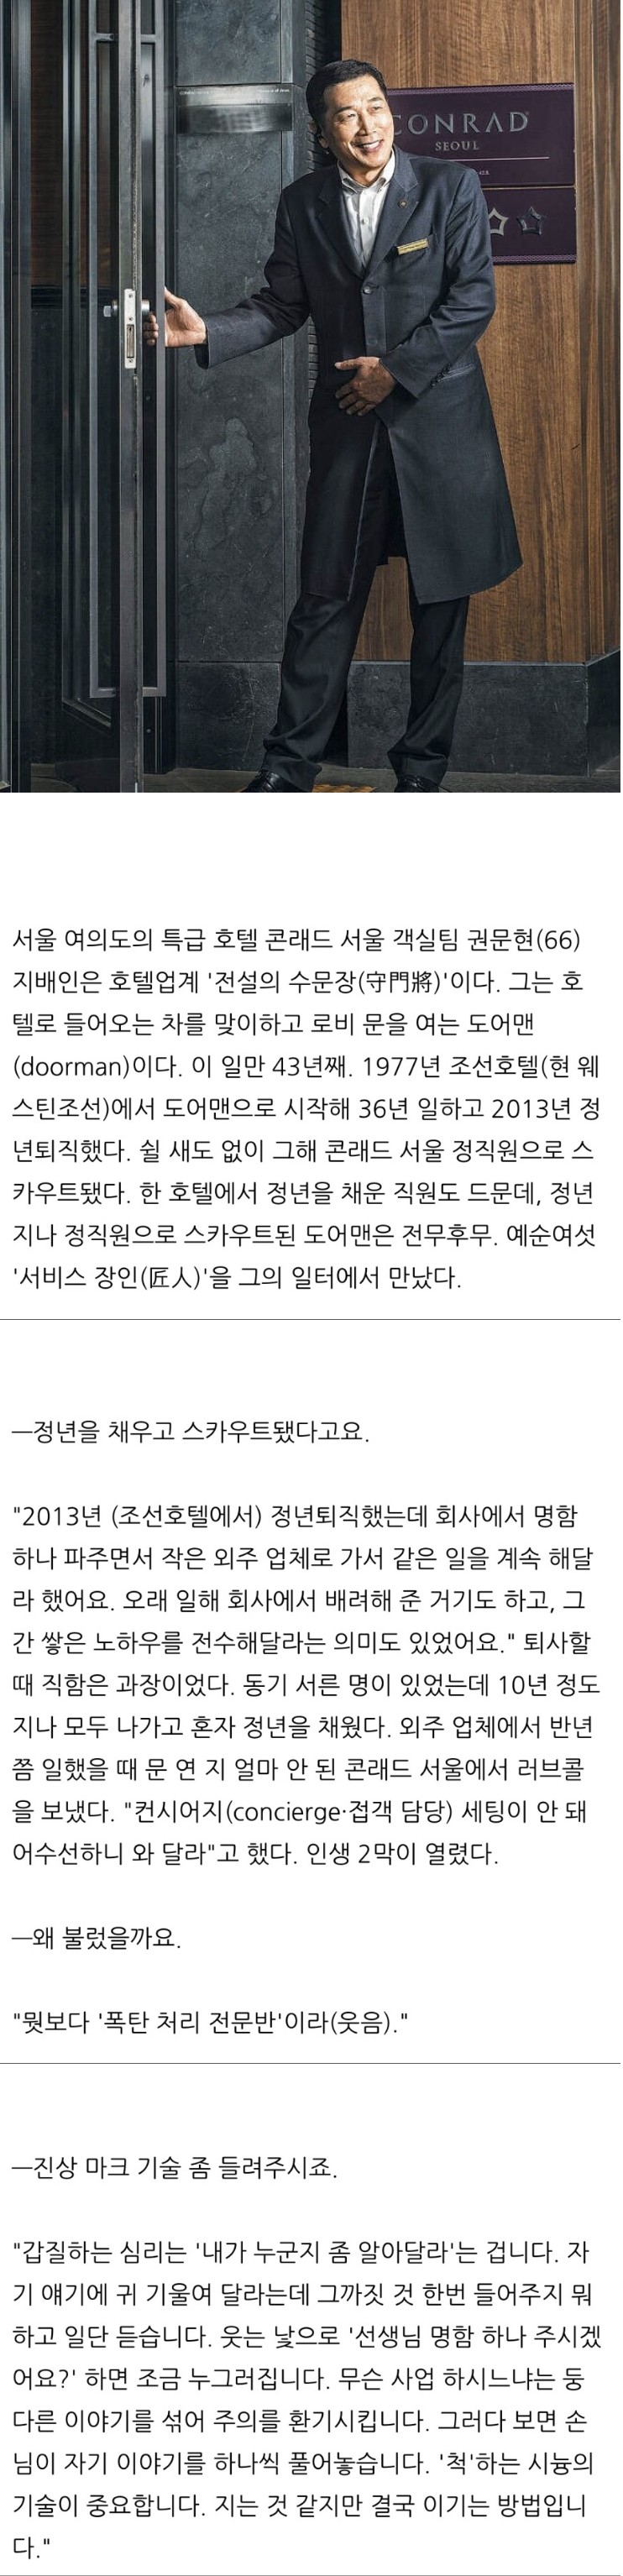 nokbeon.net-43년 경력 도어맨의 진상 손님 처리법-1번 이미지